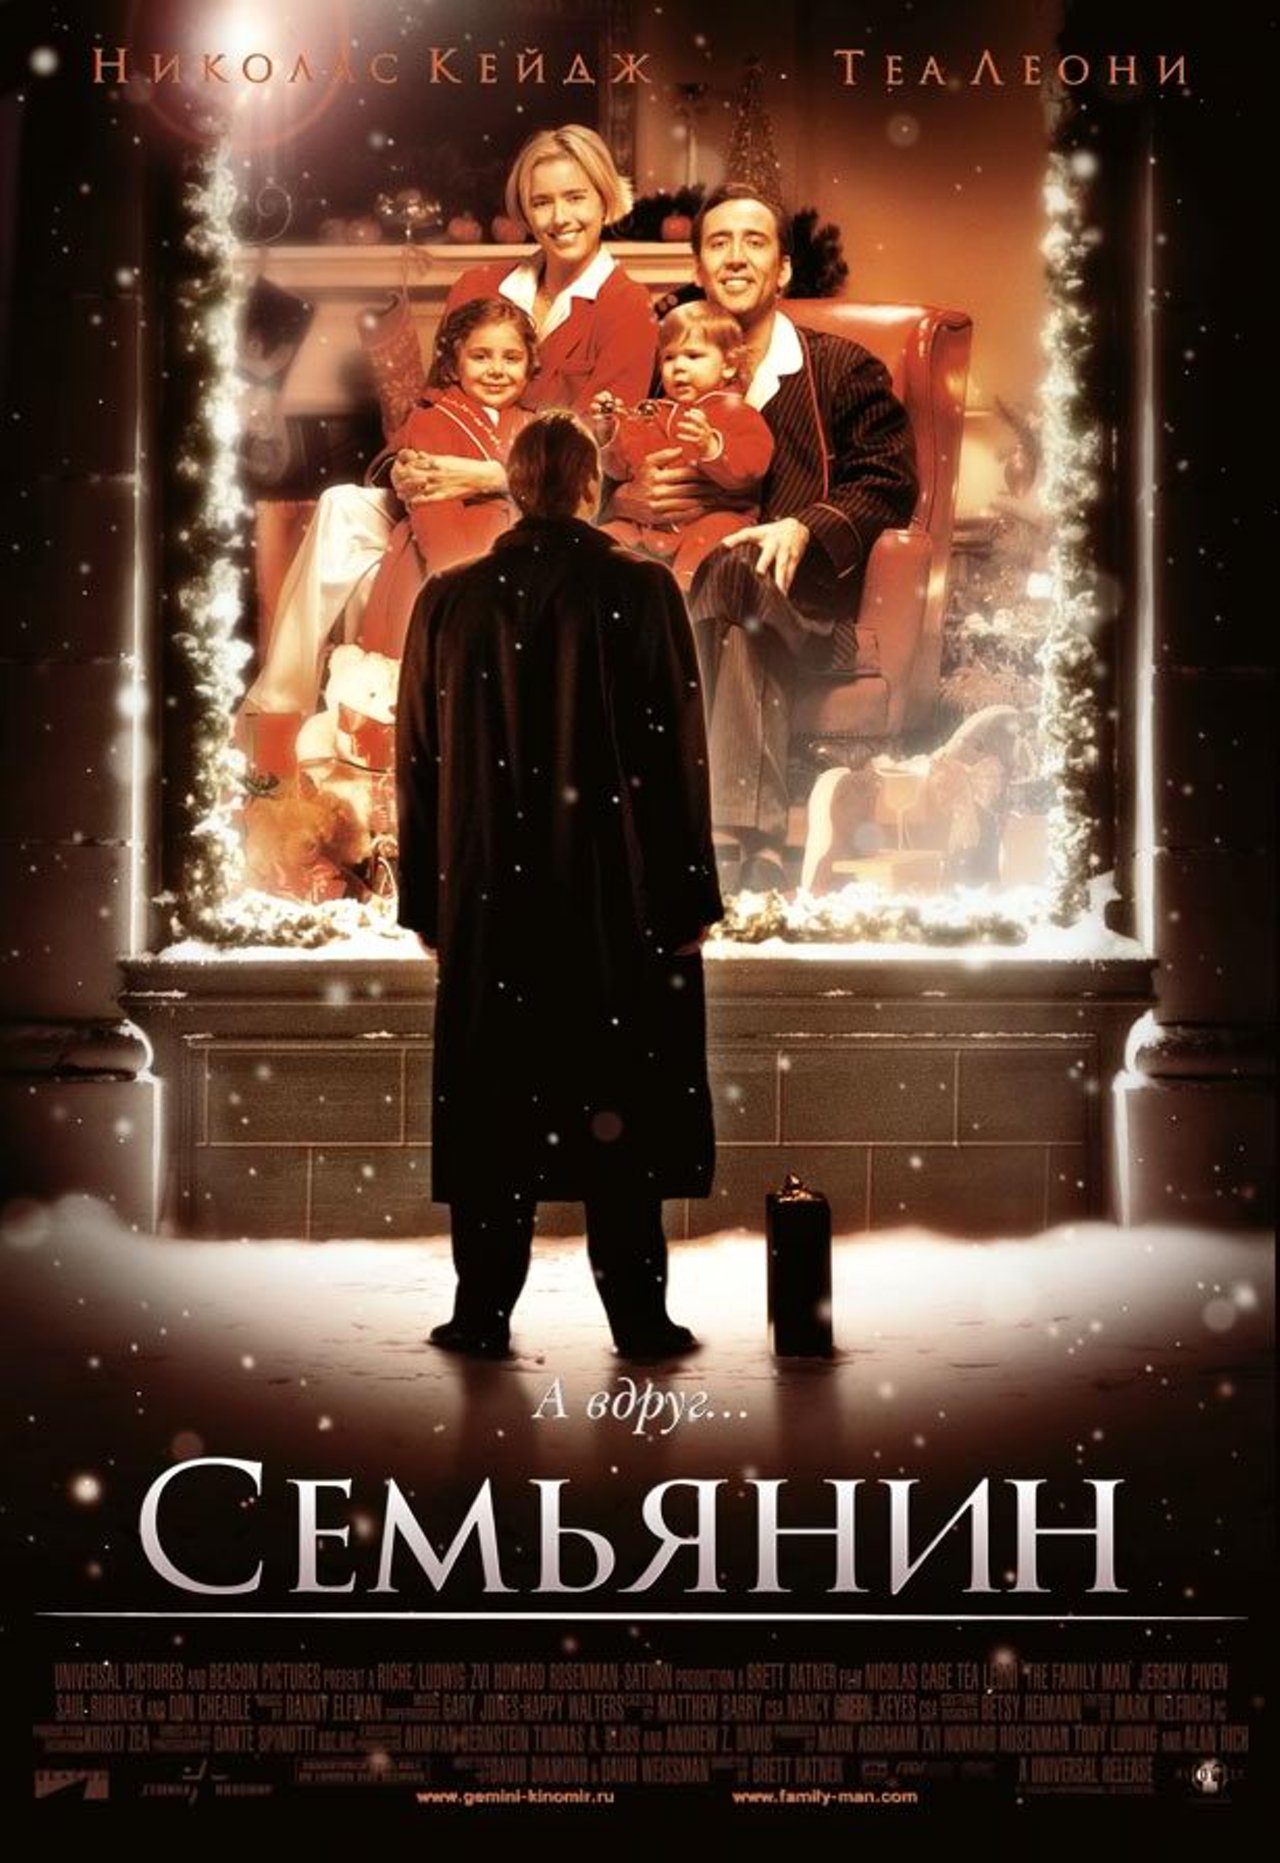 Русский семьянин. Семьянин the Family man, 2000. Николас Кейдж семьянин.